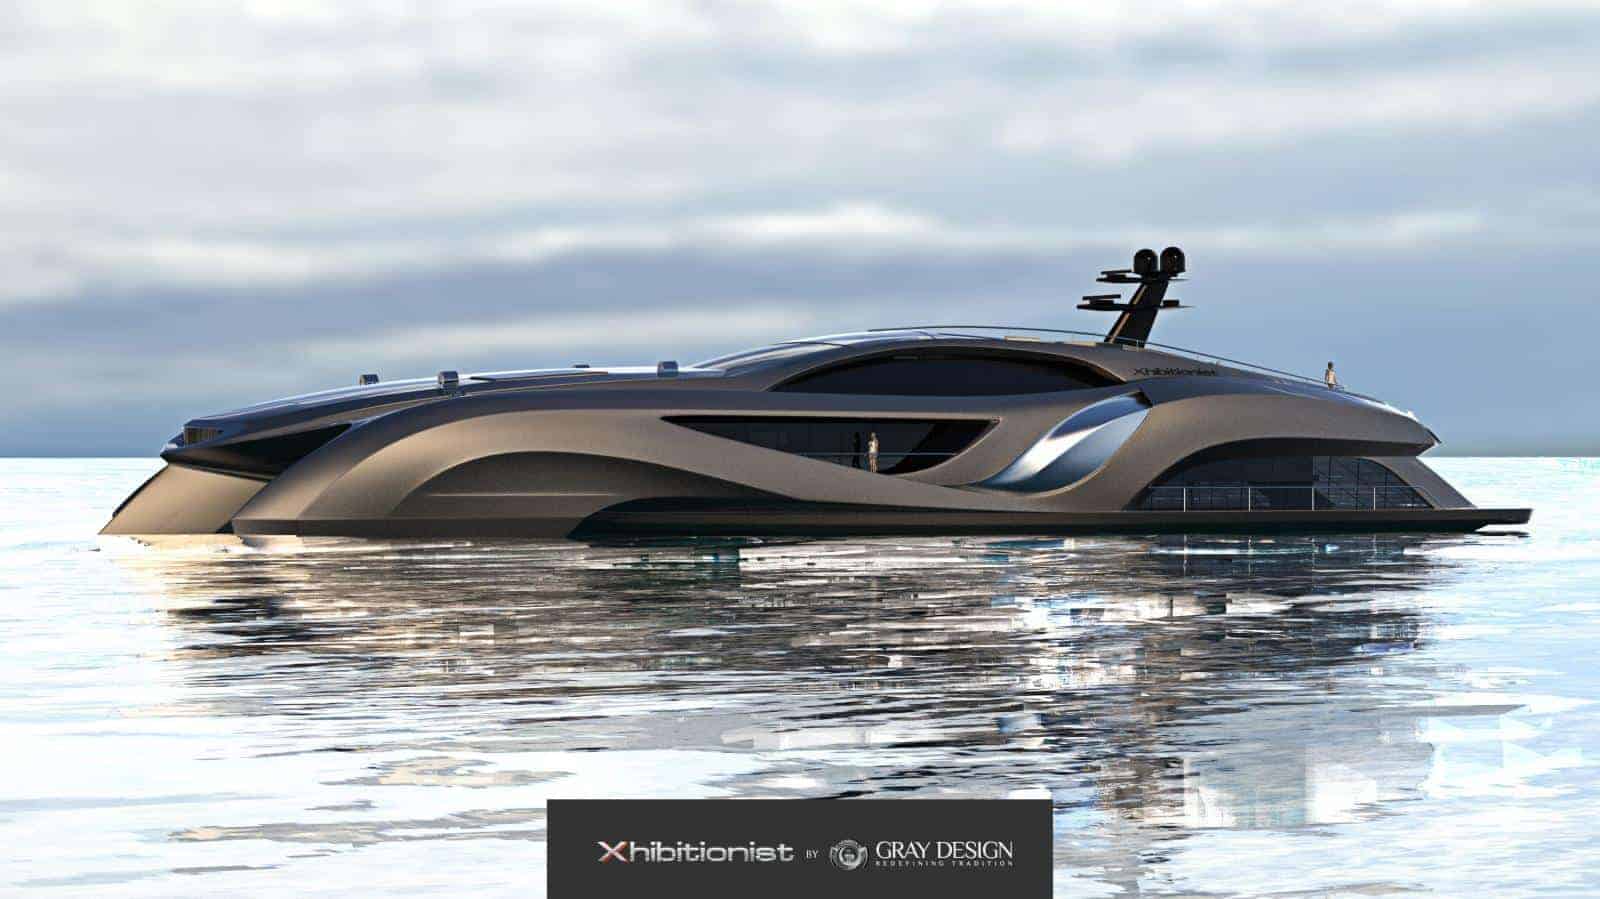 Gray Design’s Xhibitionist yacht and Xhibit G car 2